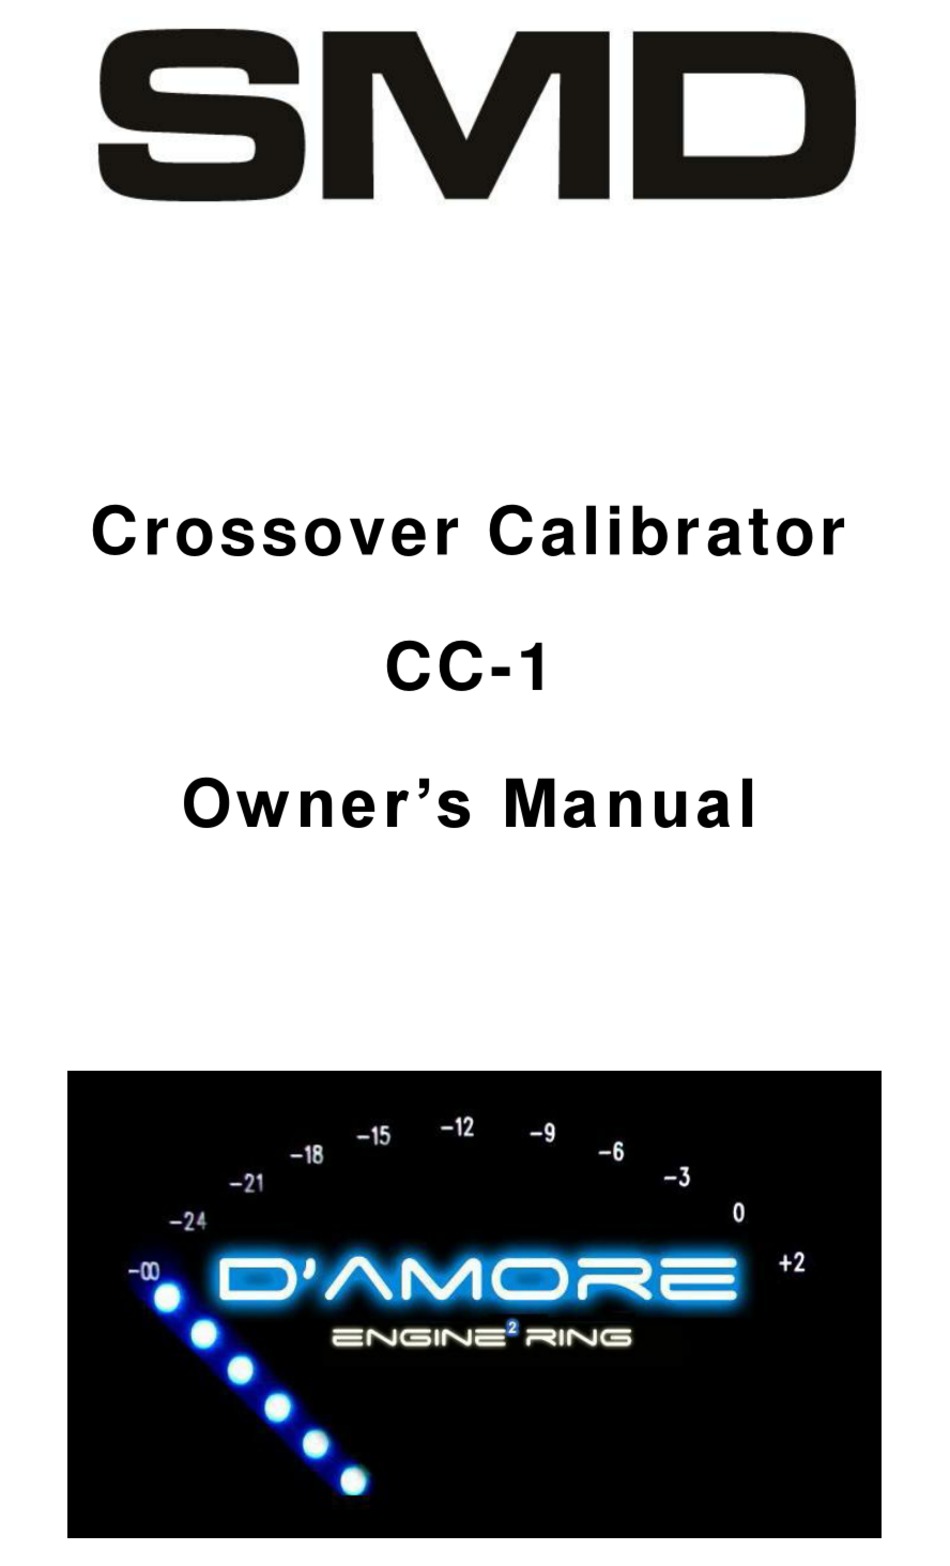 SMD CROSSOVER CALIBRATOR CC-1 